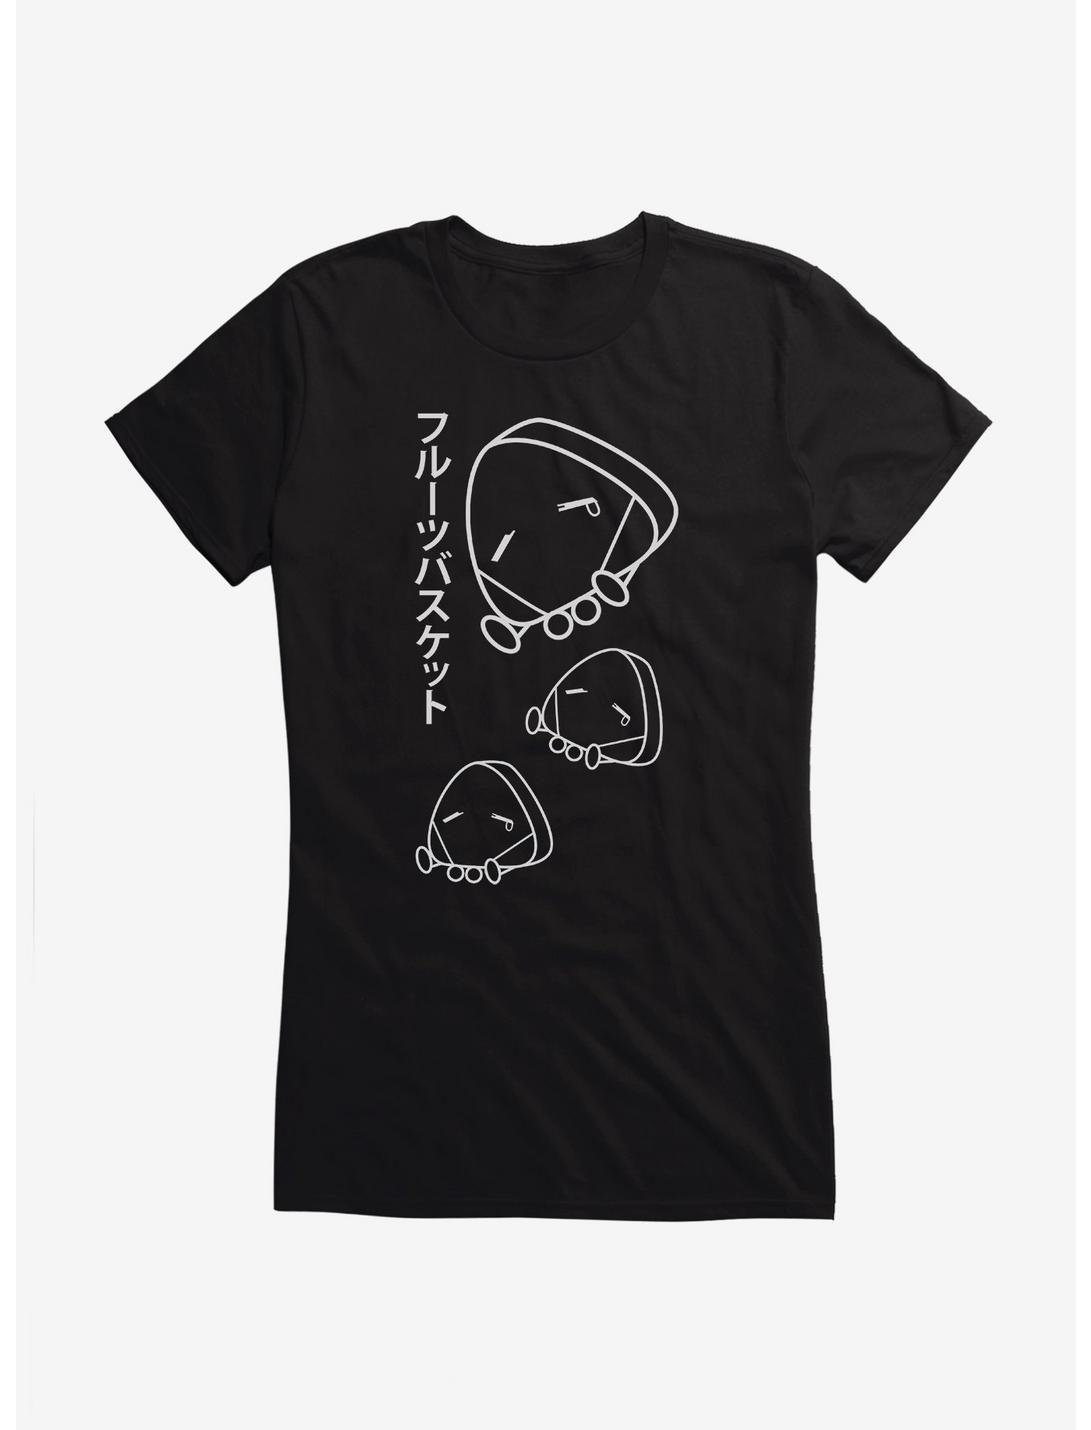 Fruits Basket Sad Onigiri Girls T-Shirt, BLACK, hi-res